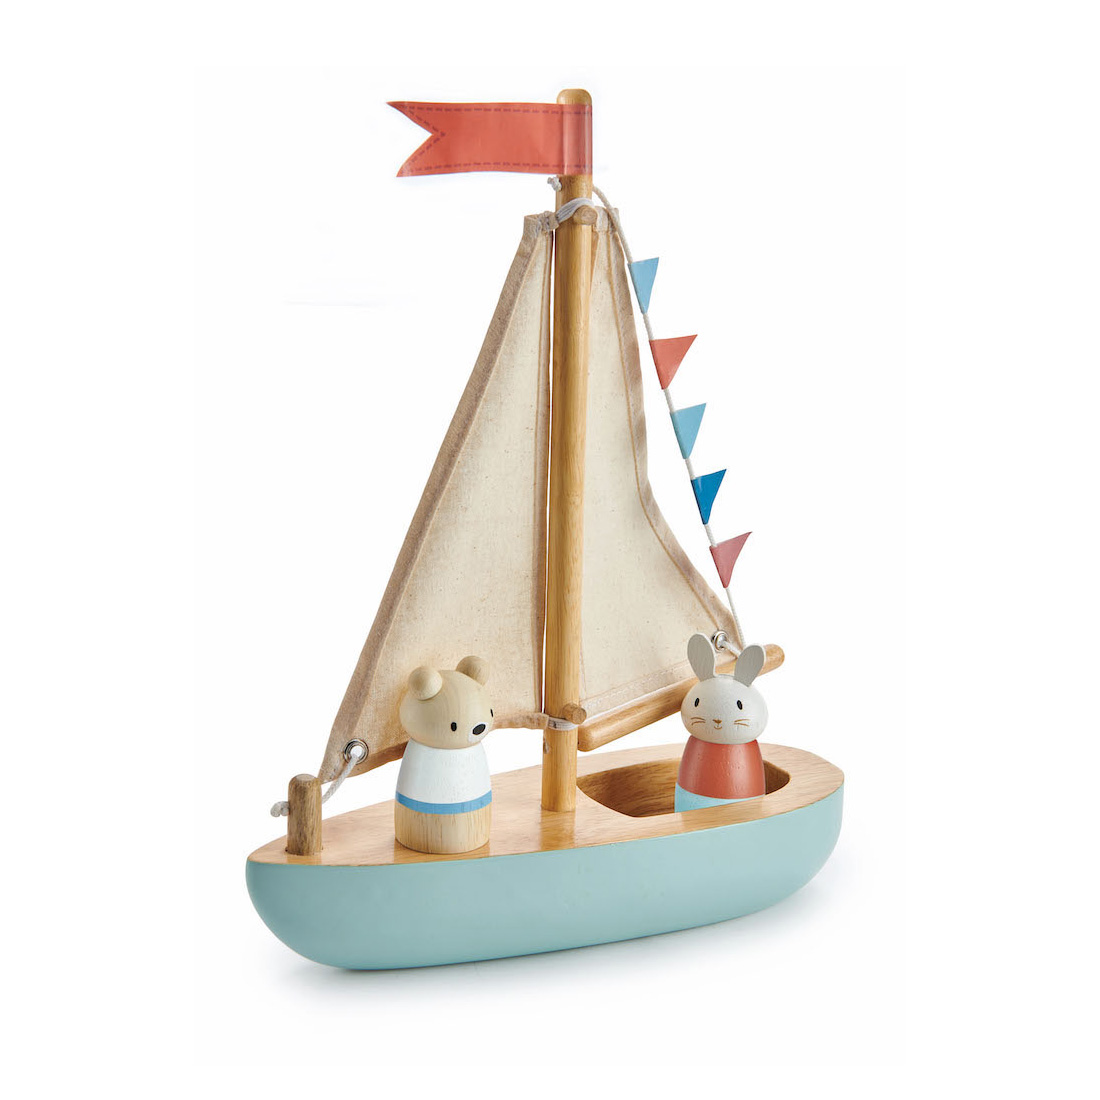 Barca din lemn a lui Bubble si Squeak, Tender Leaf Toys, Sailaway Boat Barca